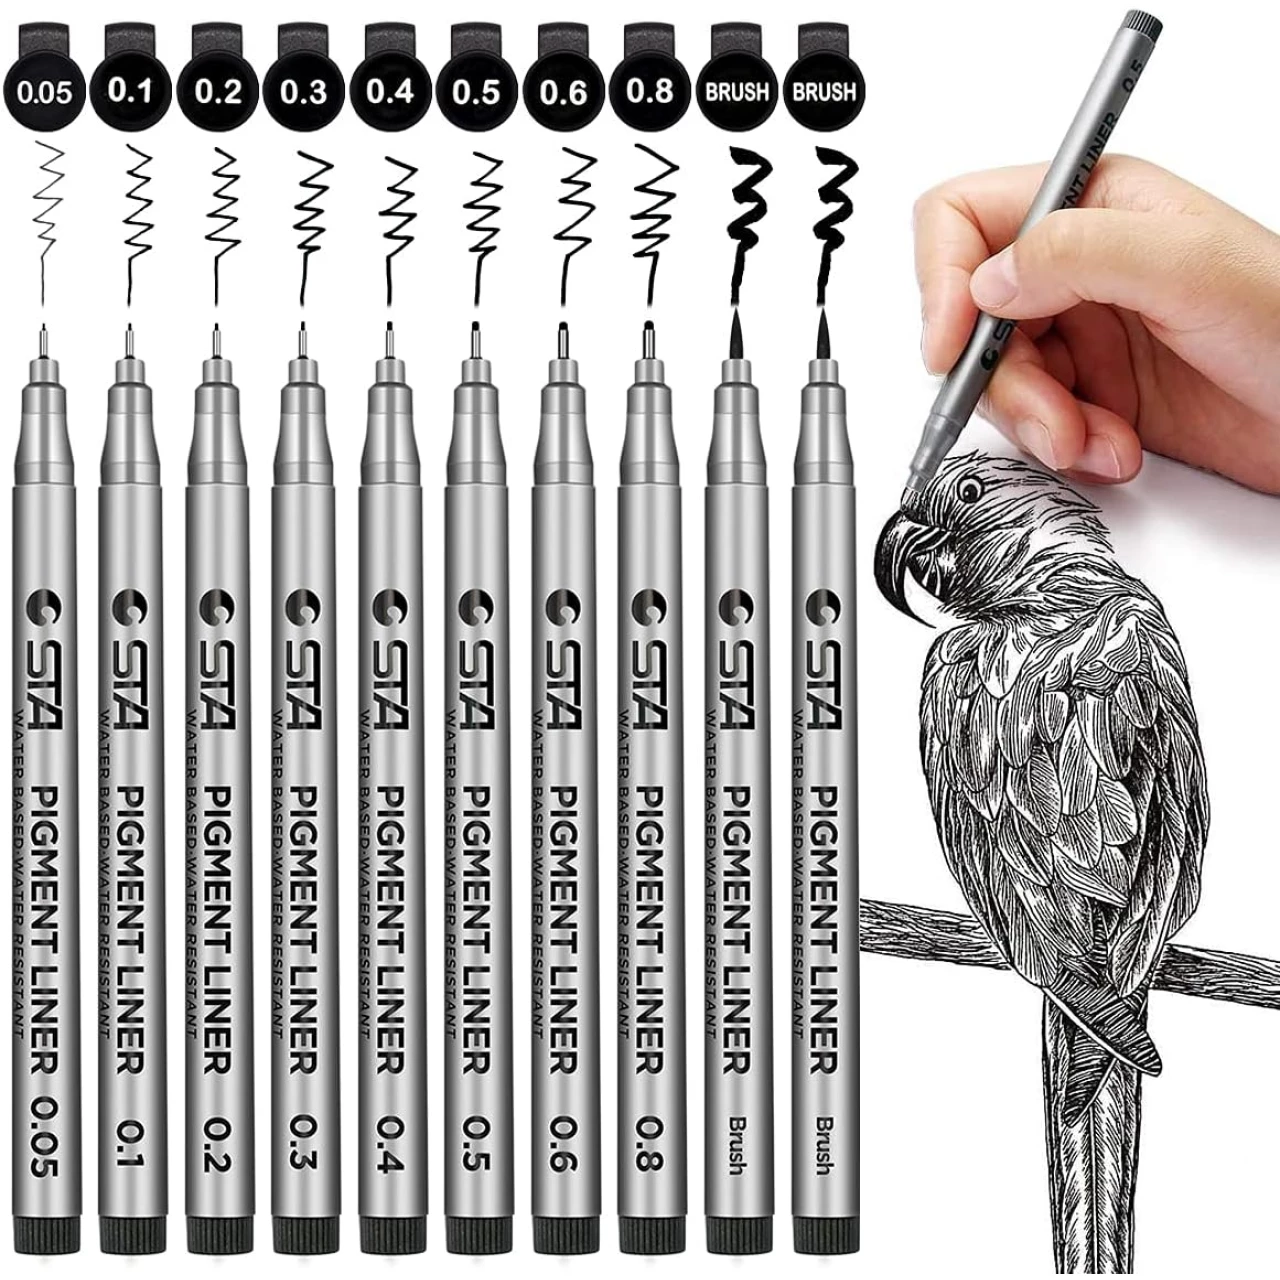 PANDAFLY Black Micro-Pen Fineliner Ink Pens